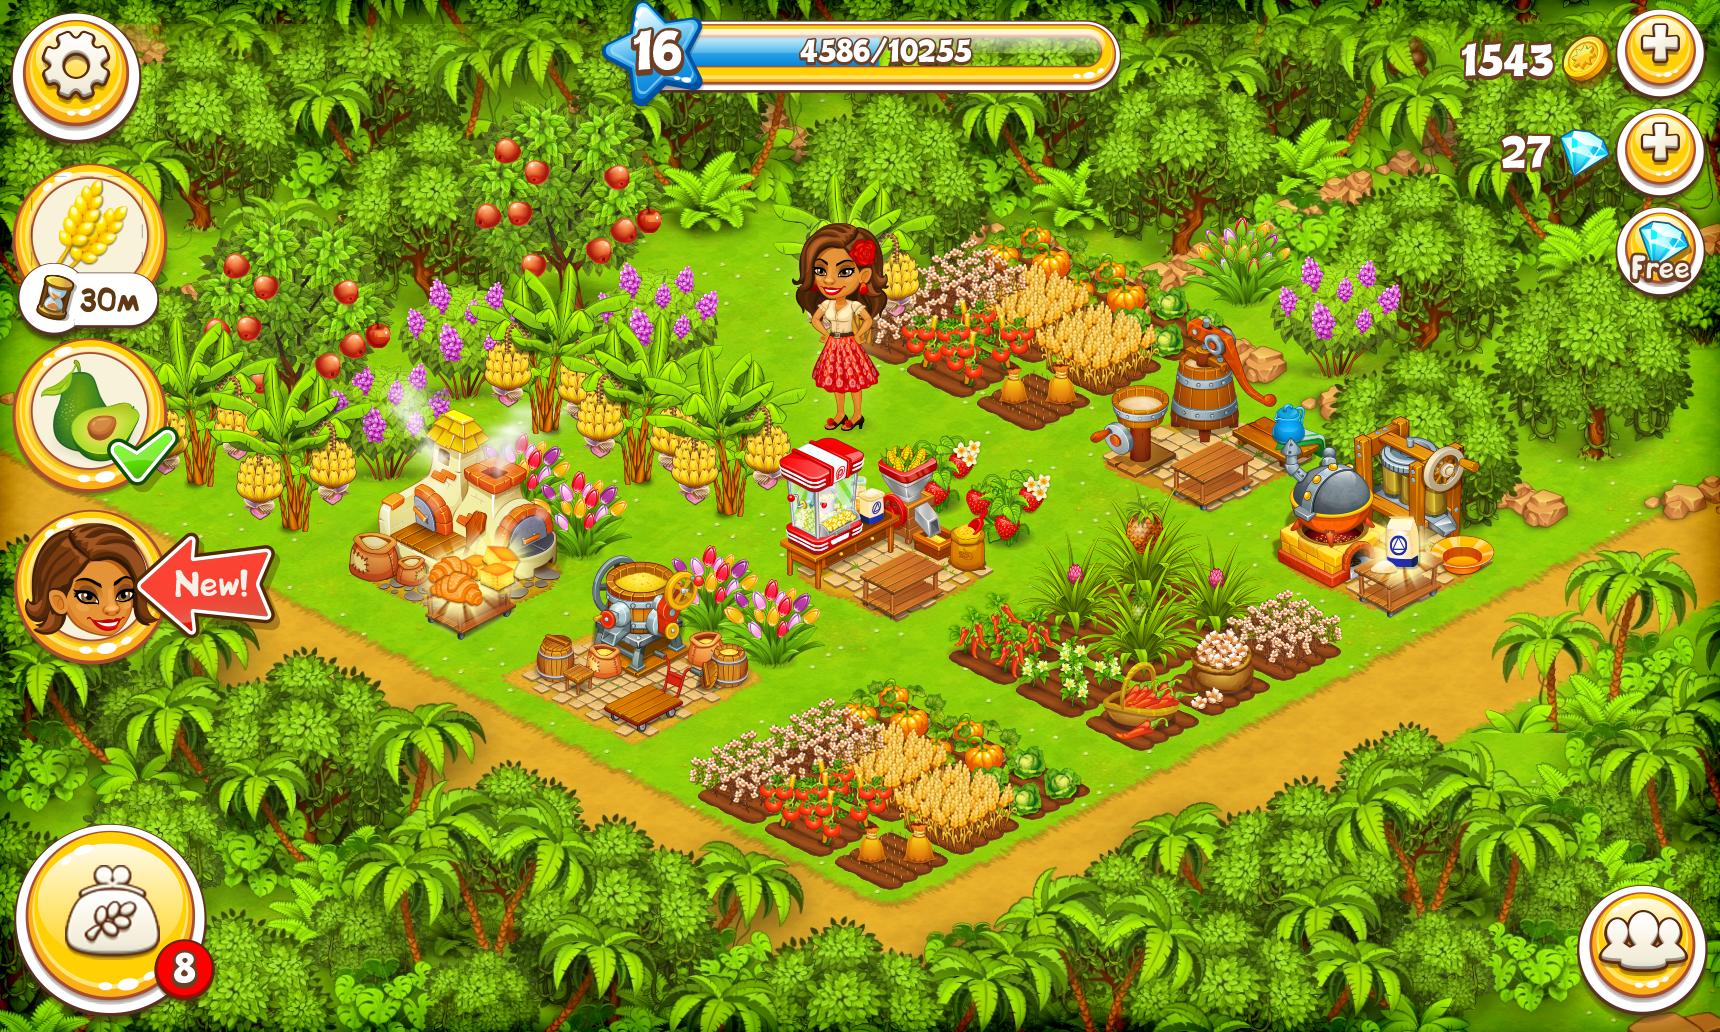 Farm Paradise Fun farm trade game at lost island 2.17 Screenshot 24